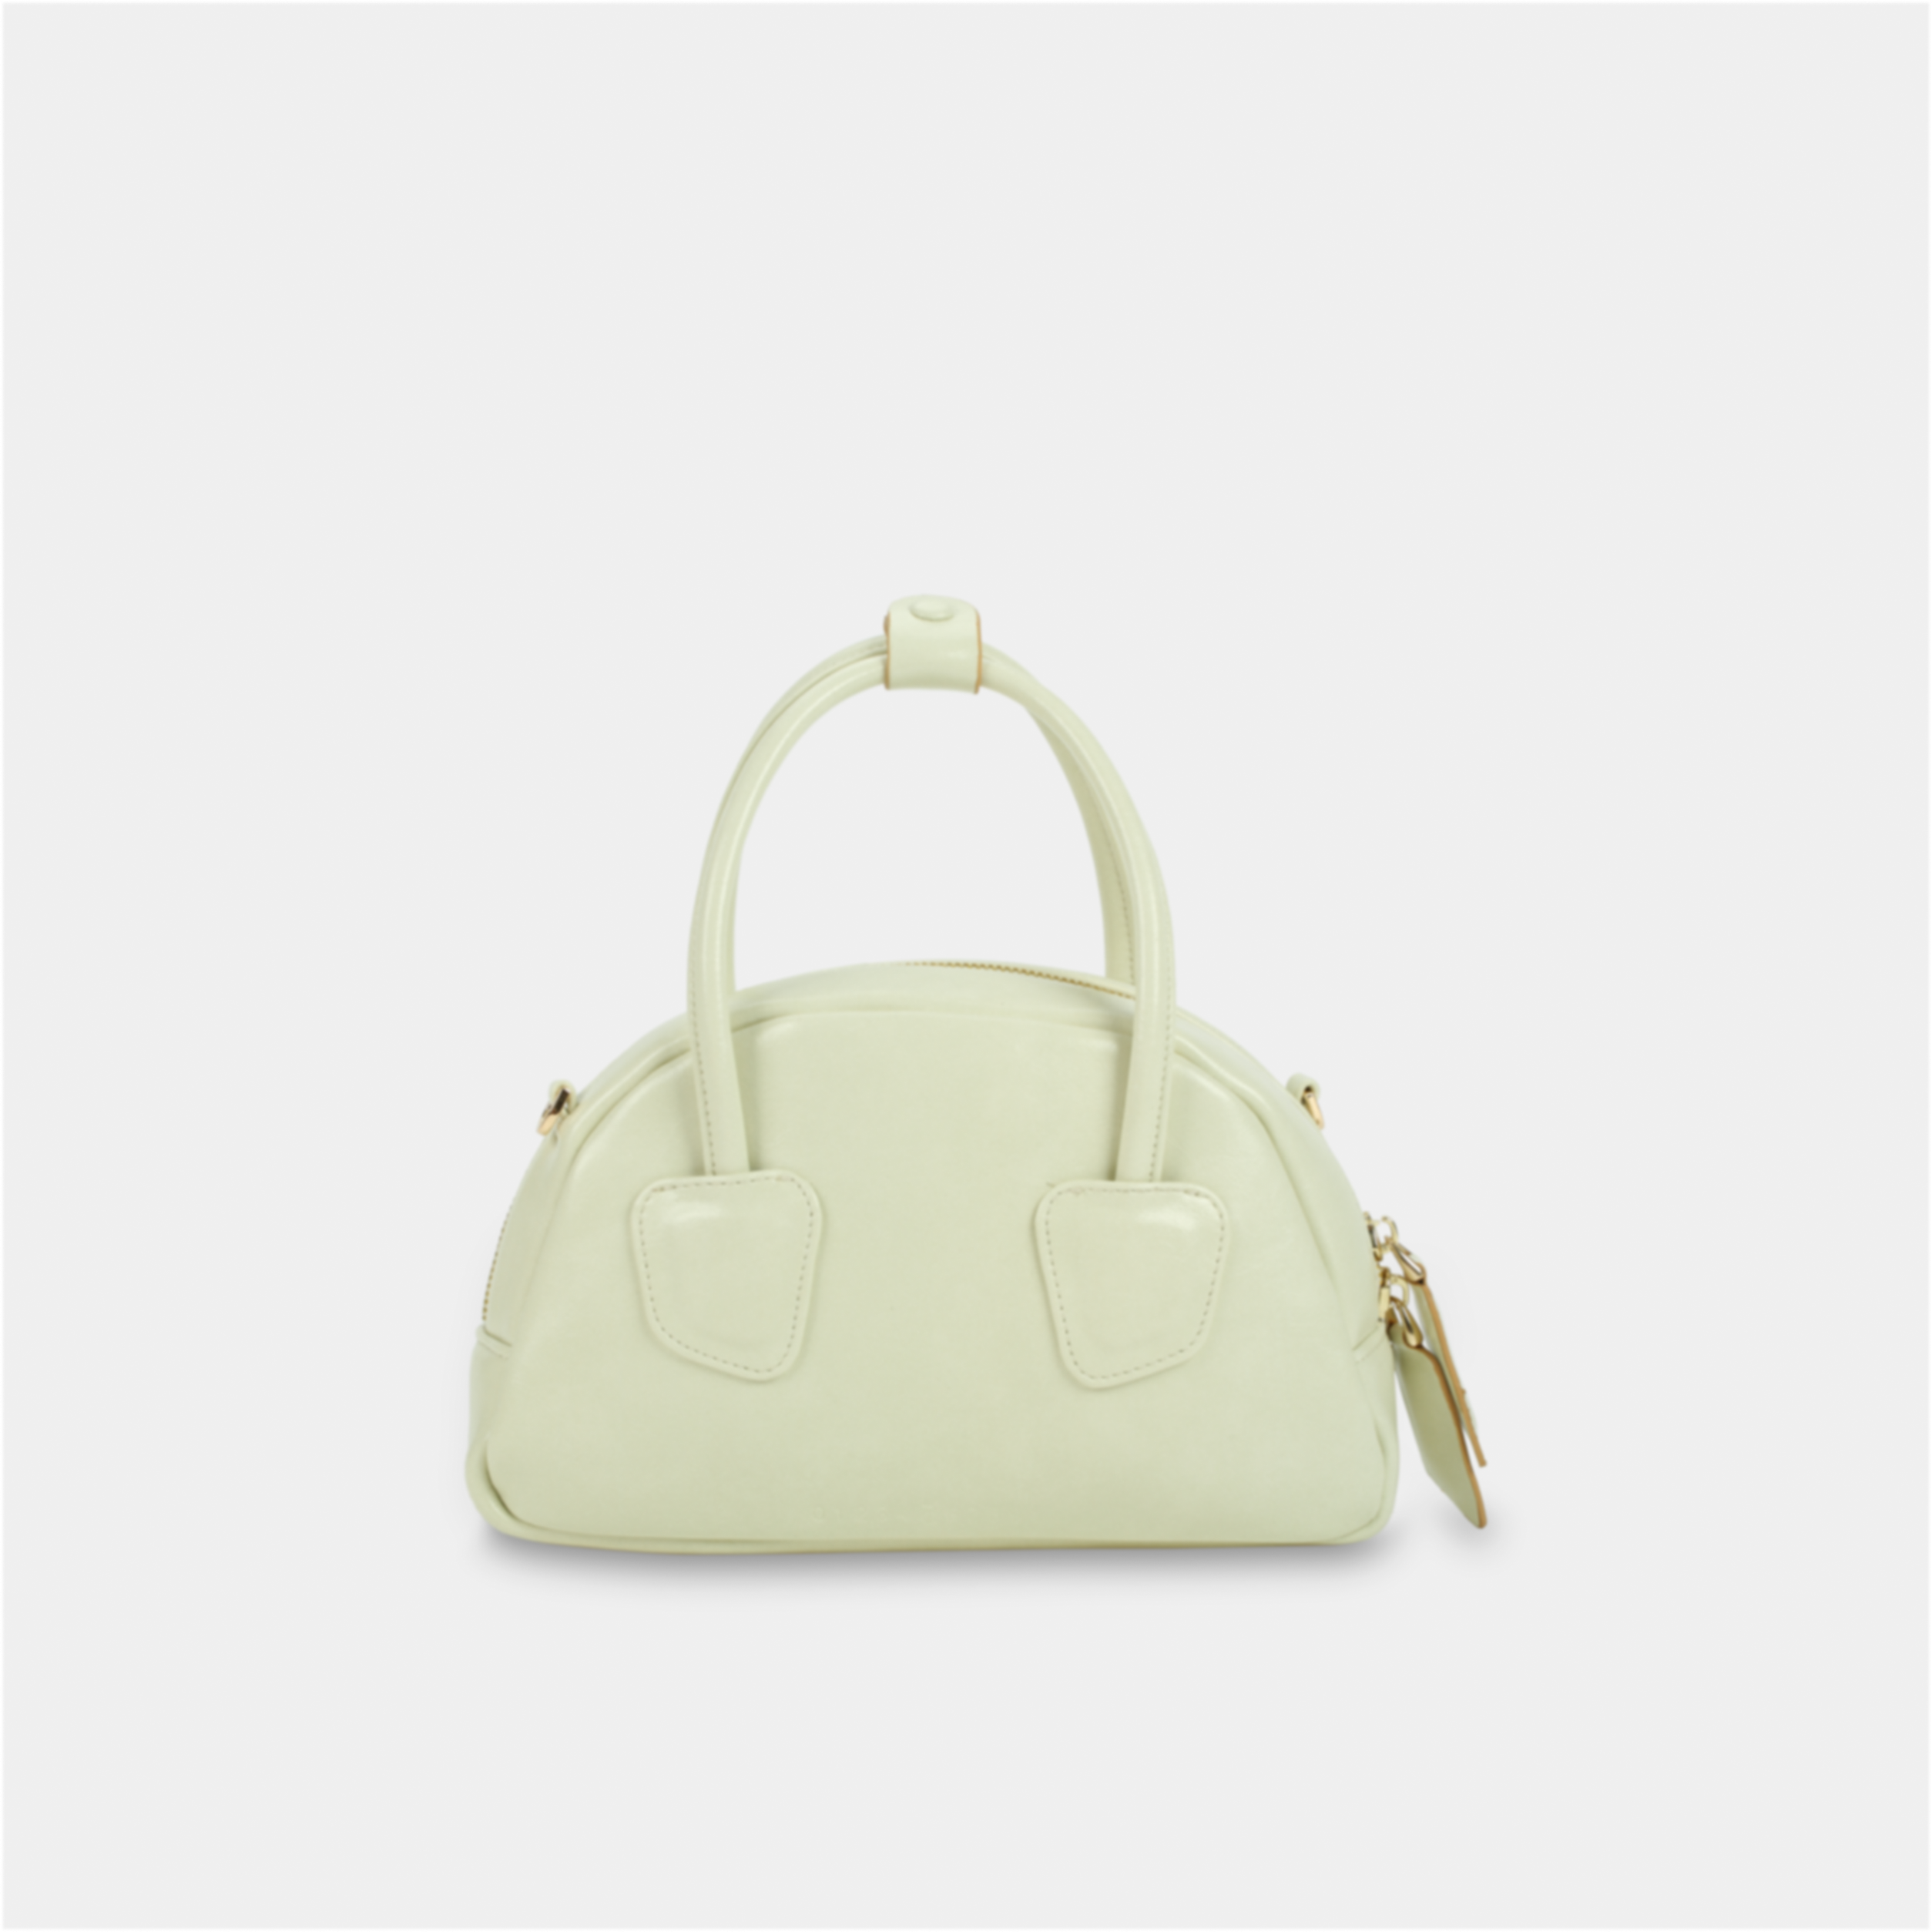 TACOS Handbag in White color large size (M)